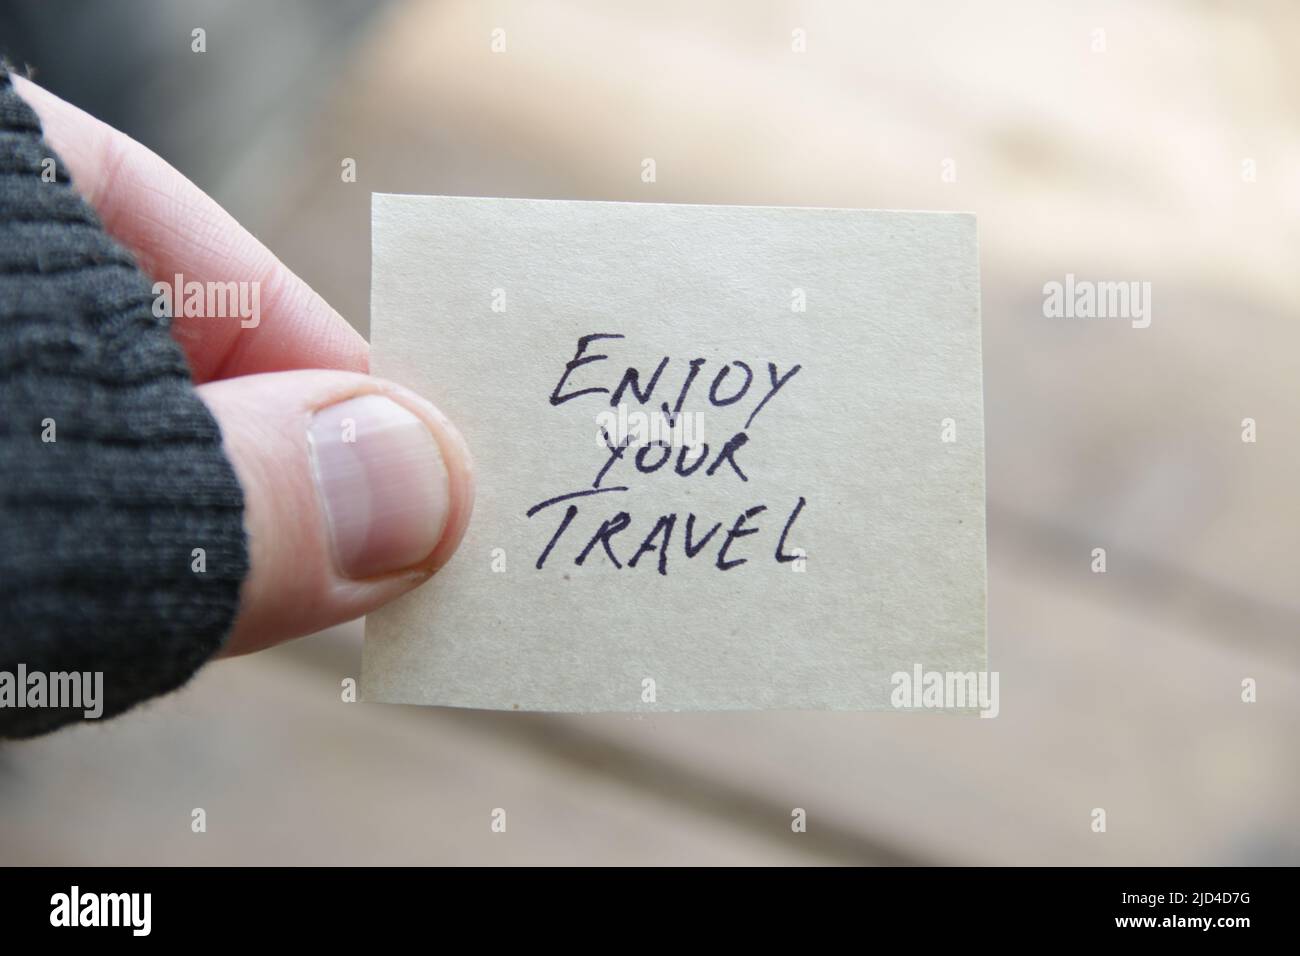 Enjoy your travel idea. The inscription on the tag. Stock Photo